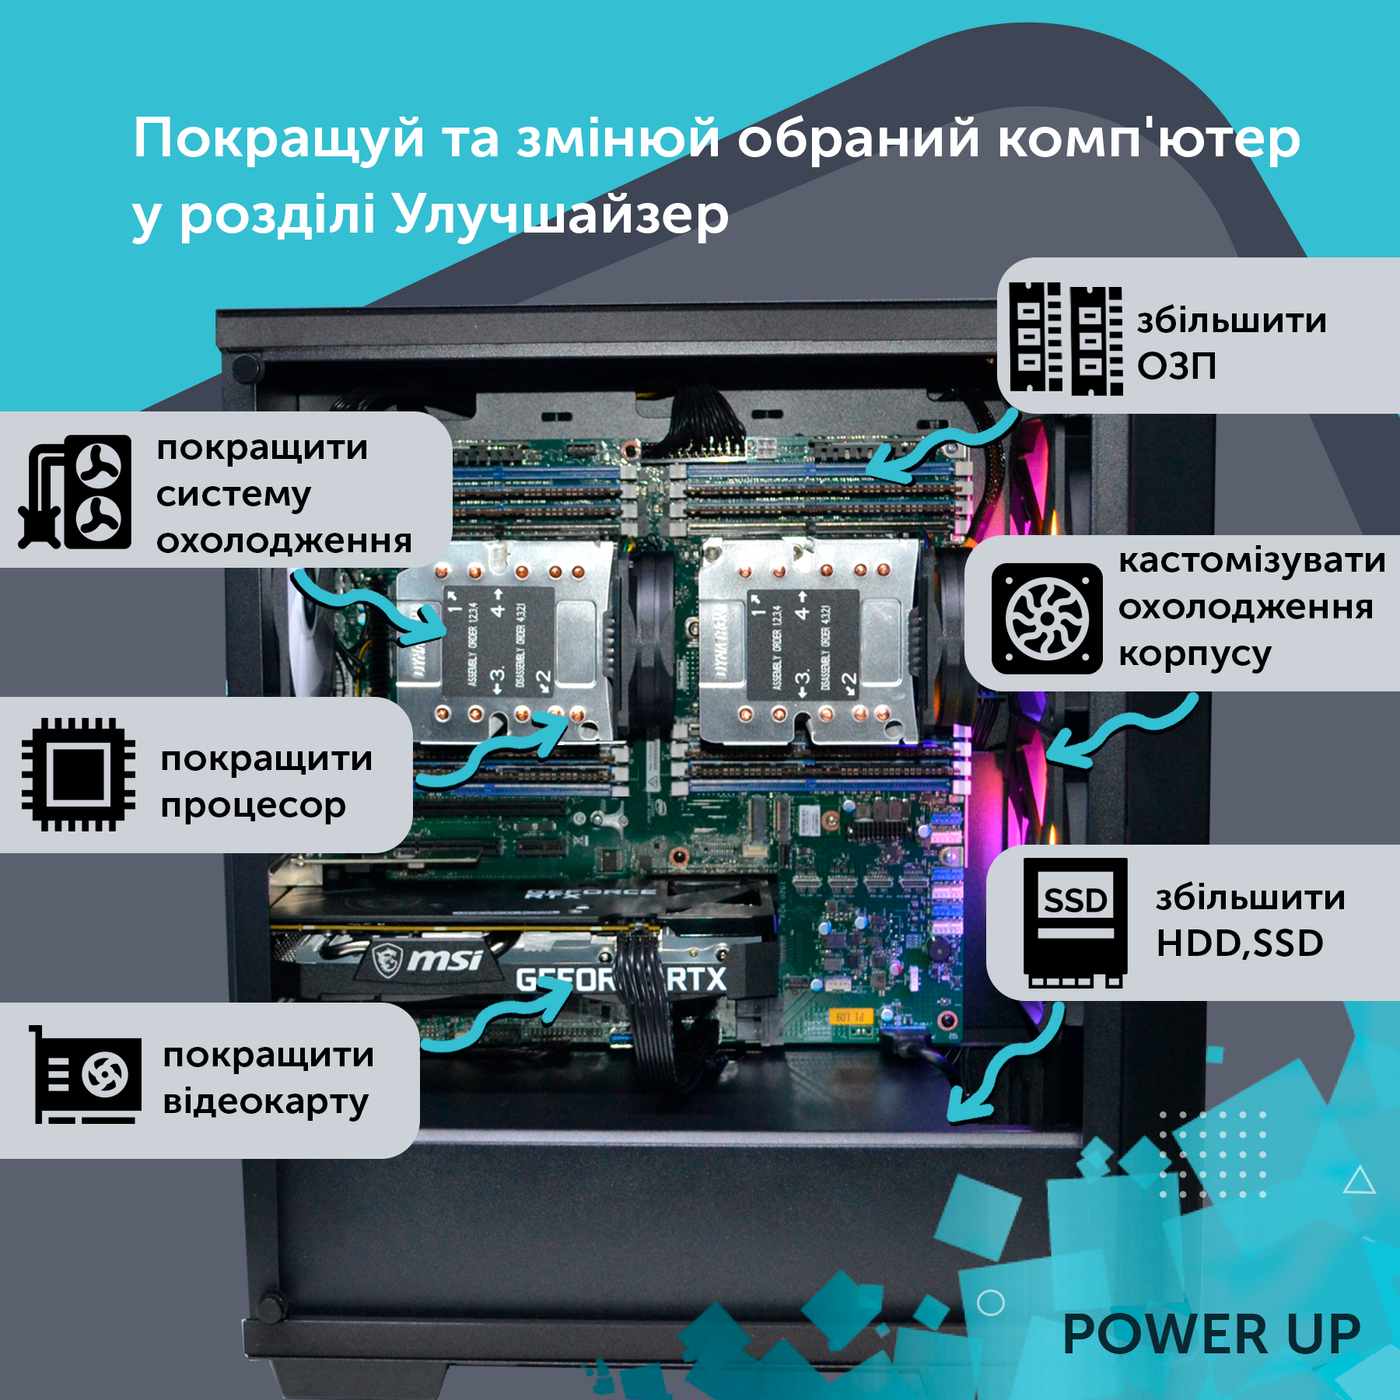 Рабочая станция PowerUp Desktop #307 Core i5 14600K/32 GB/SSD 512GB/GeForce RTX 4070Ti 12GB